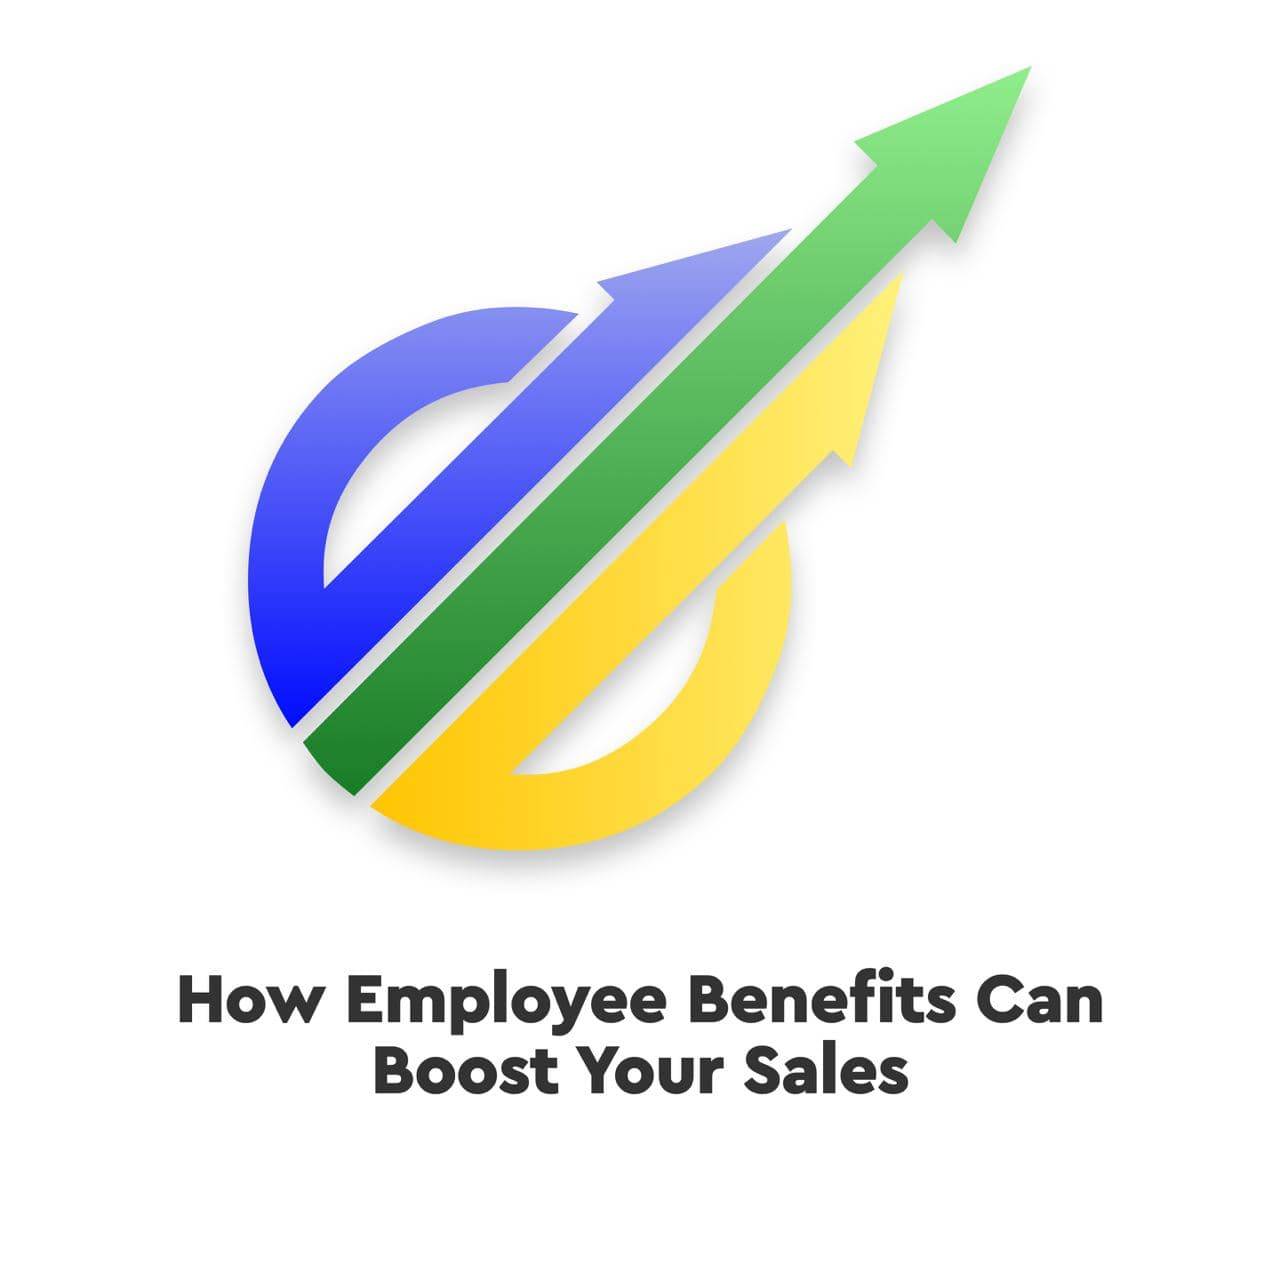 Advantages of Having Employee Benefits